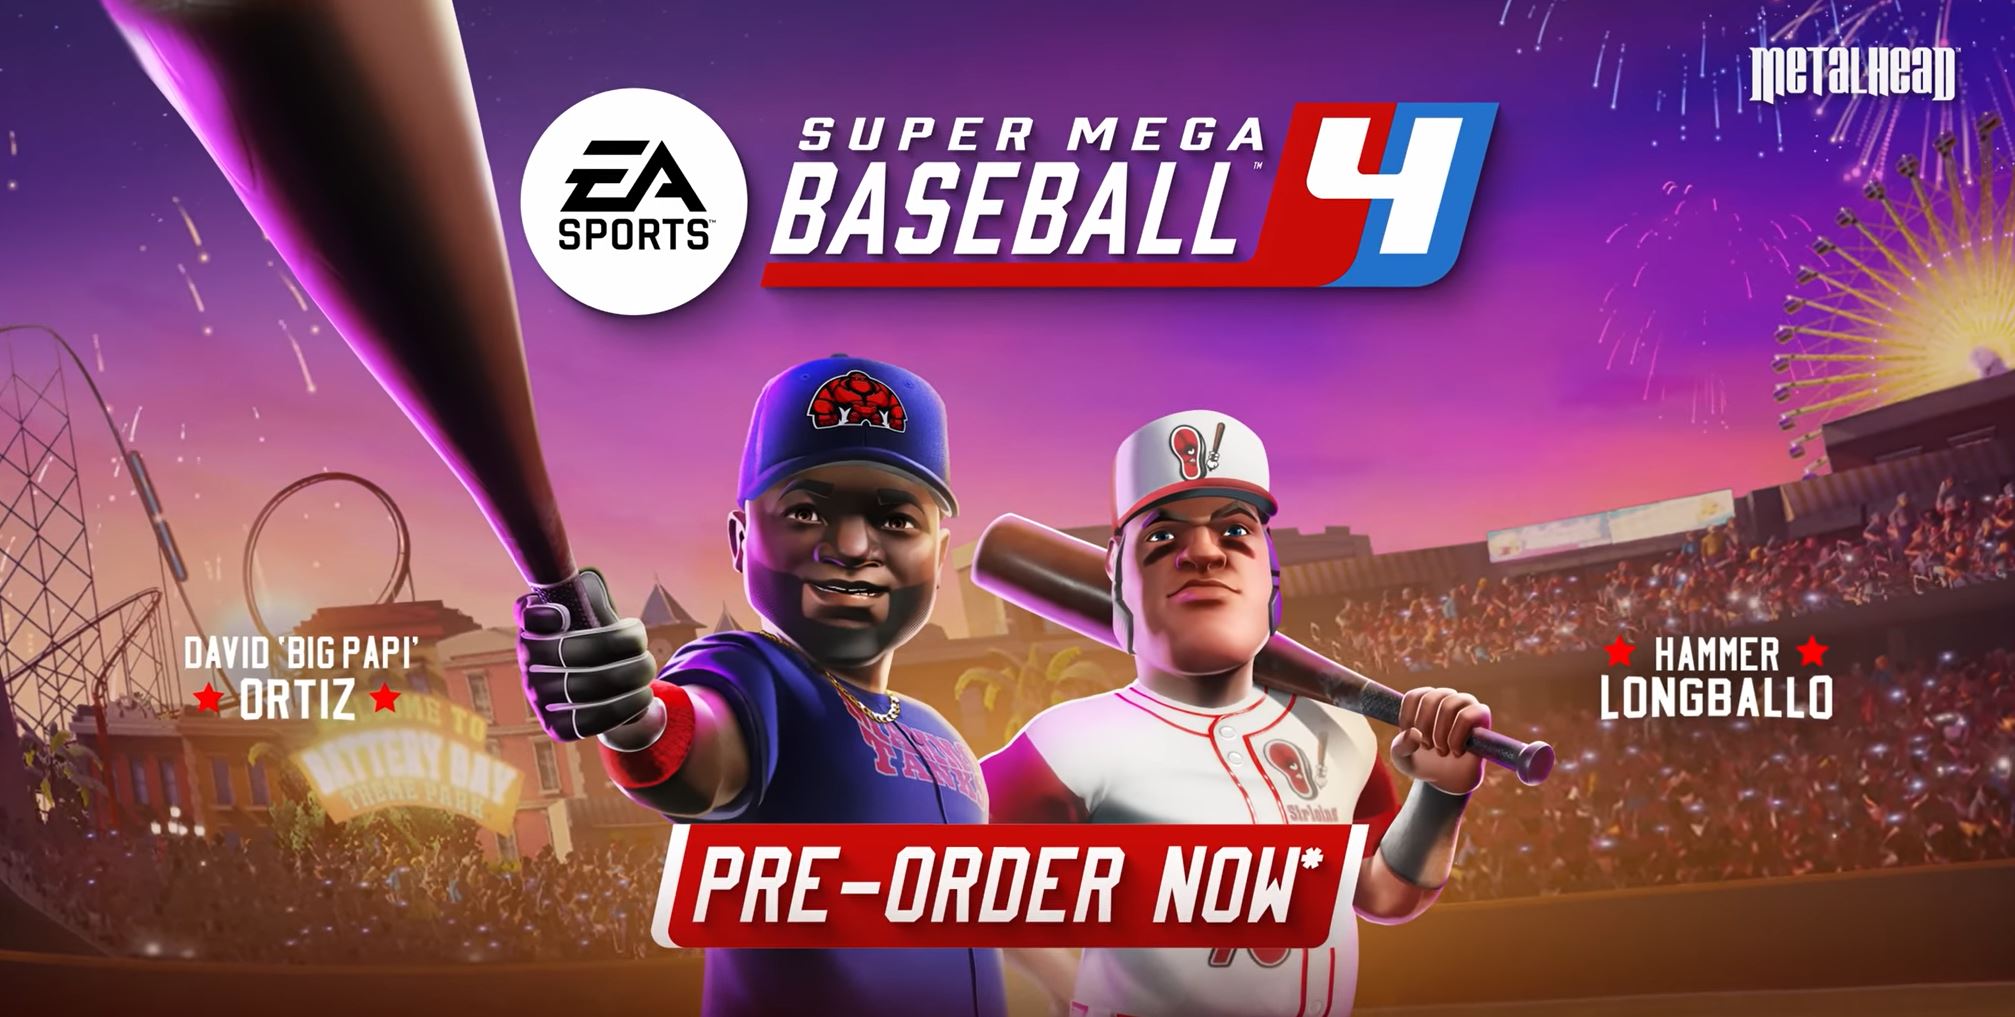 Super Mega Baseball 4 nuovo video